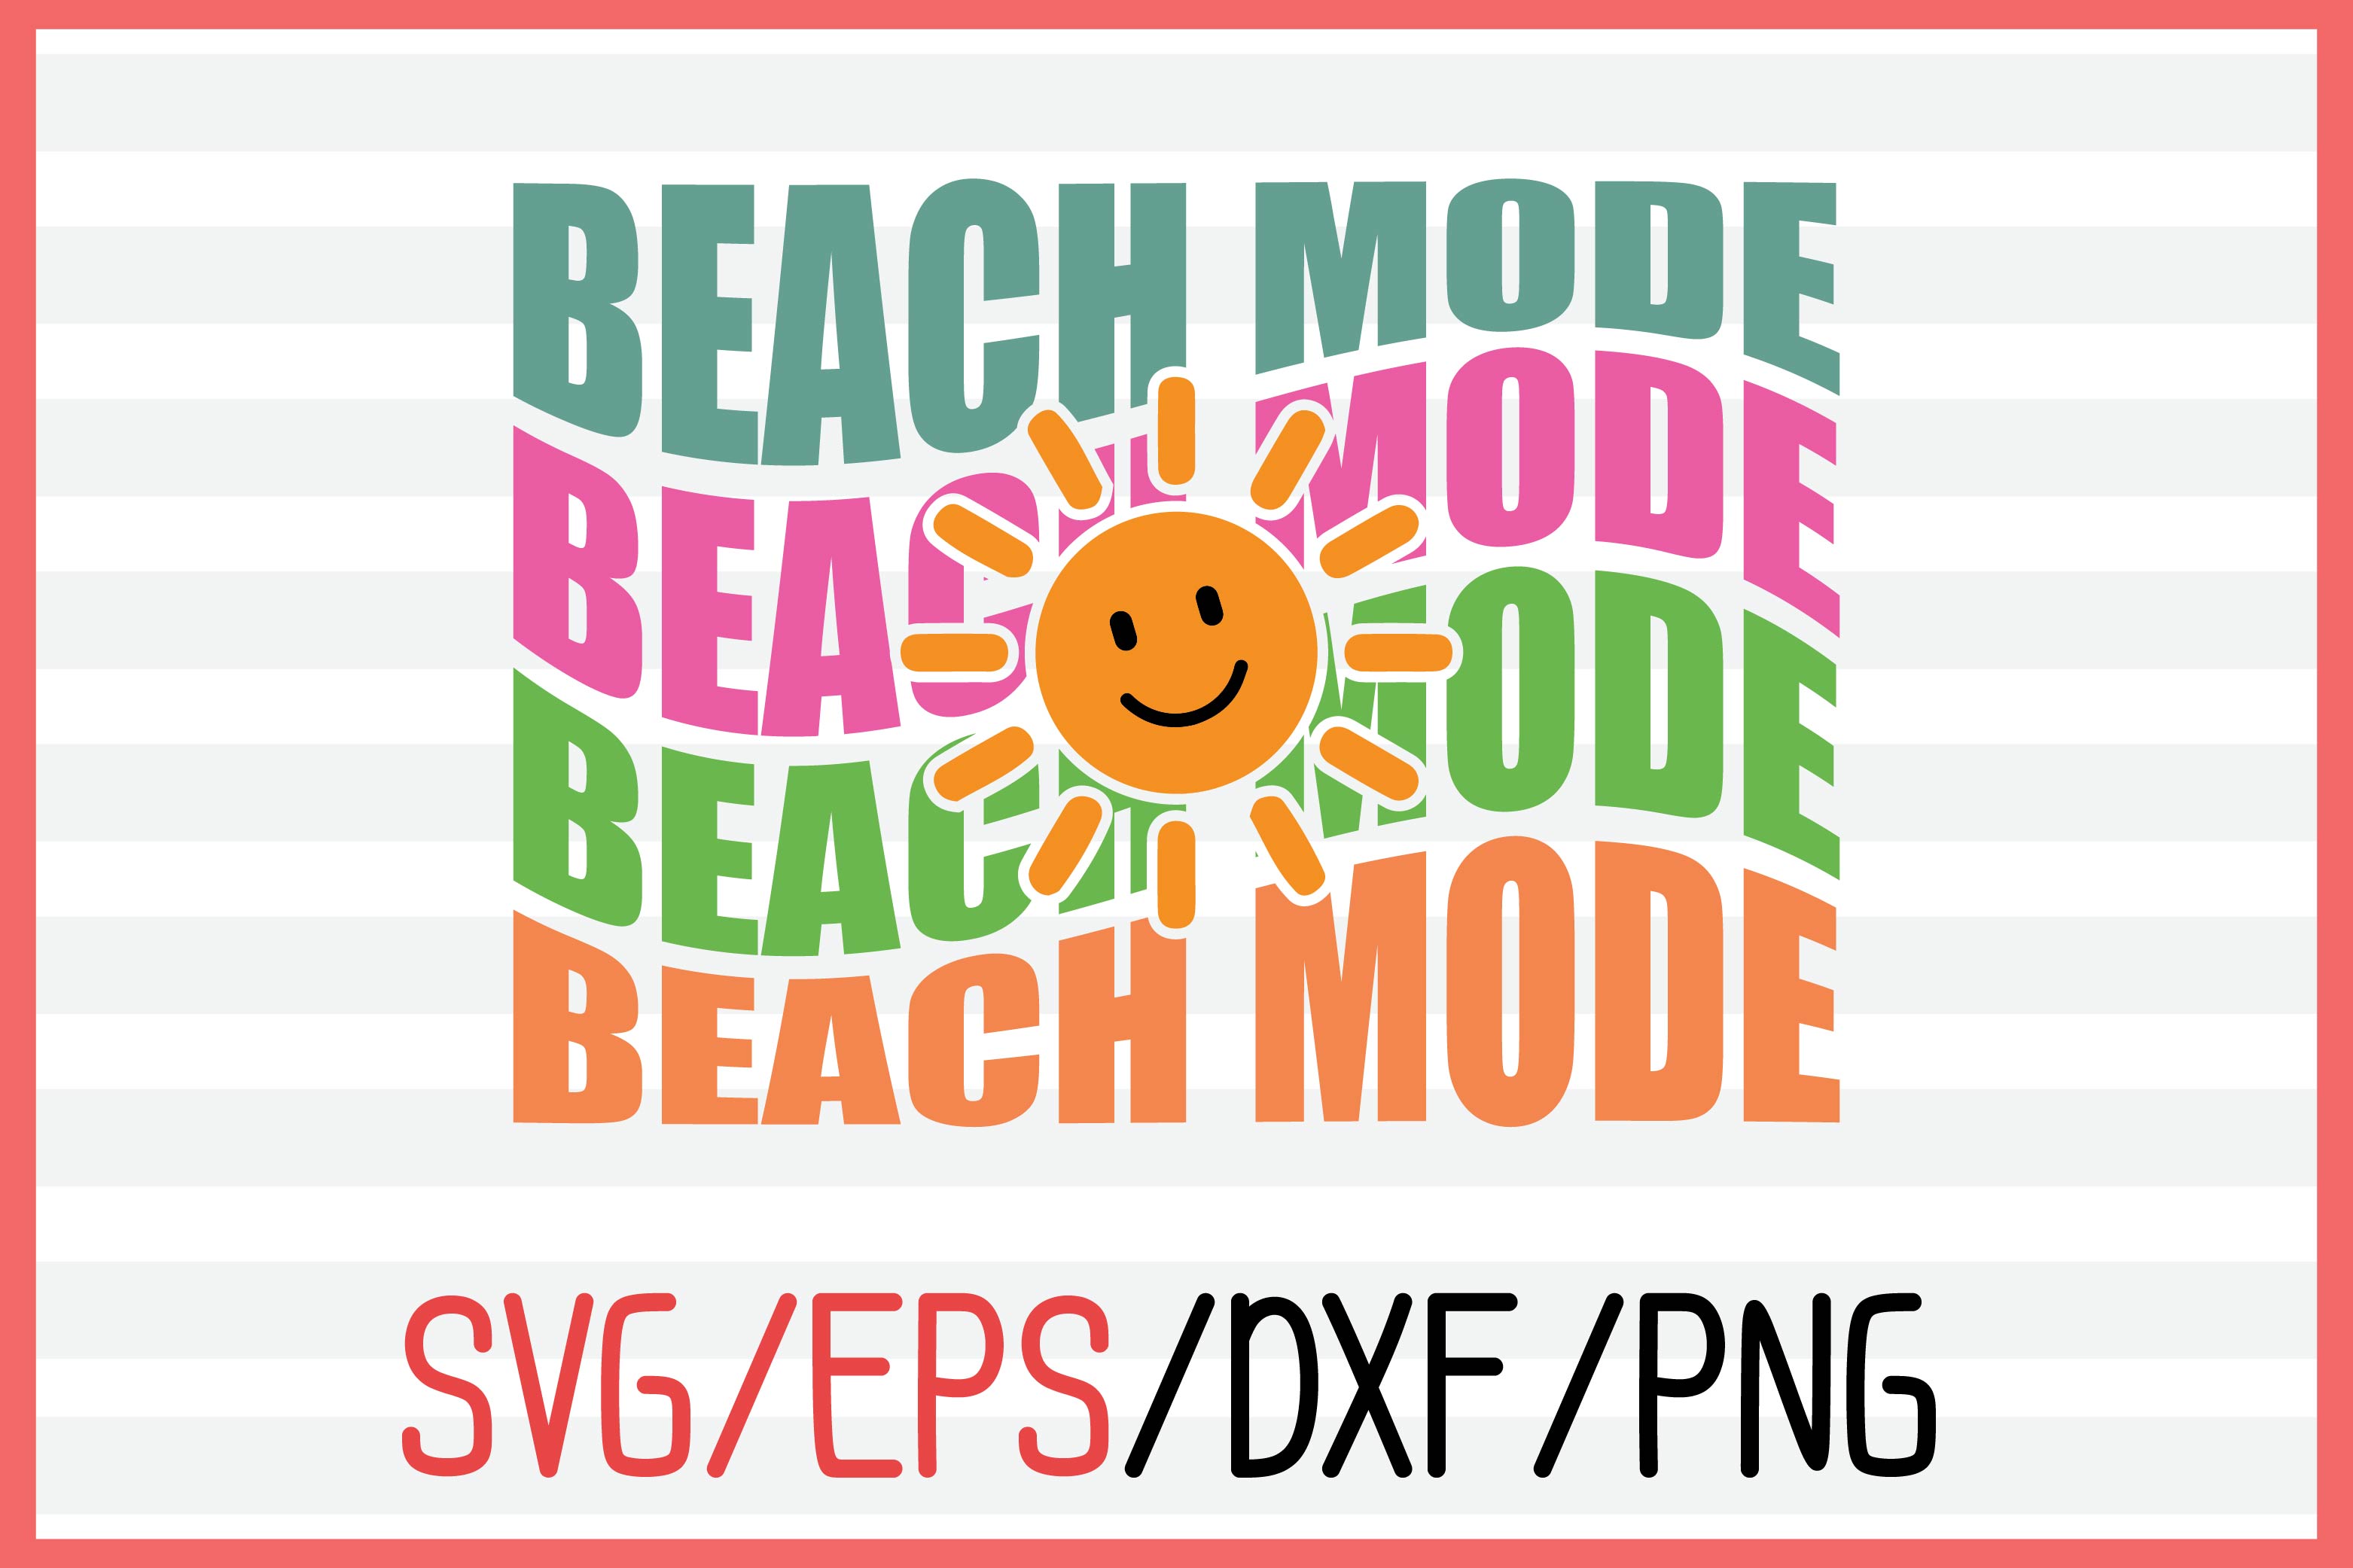 About Beach mode retro svg design pinterest preview image.